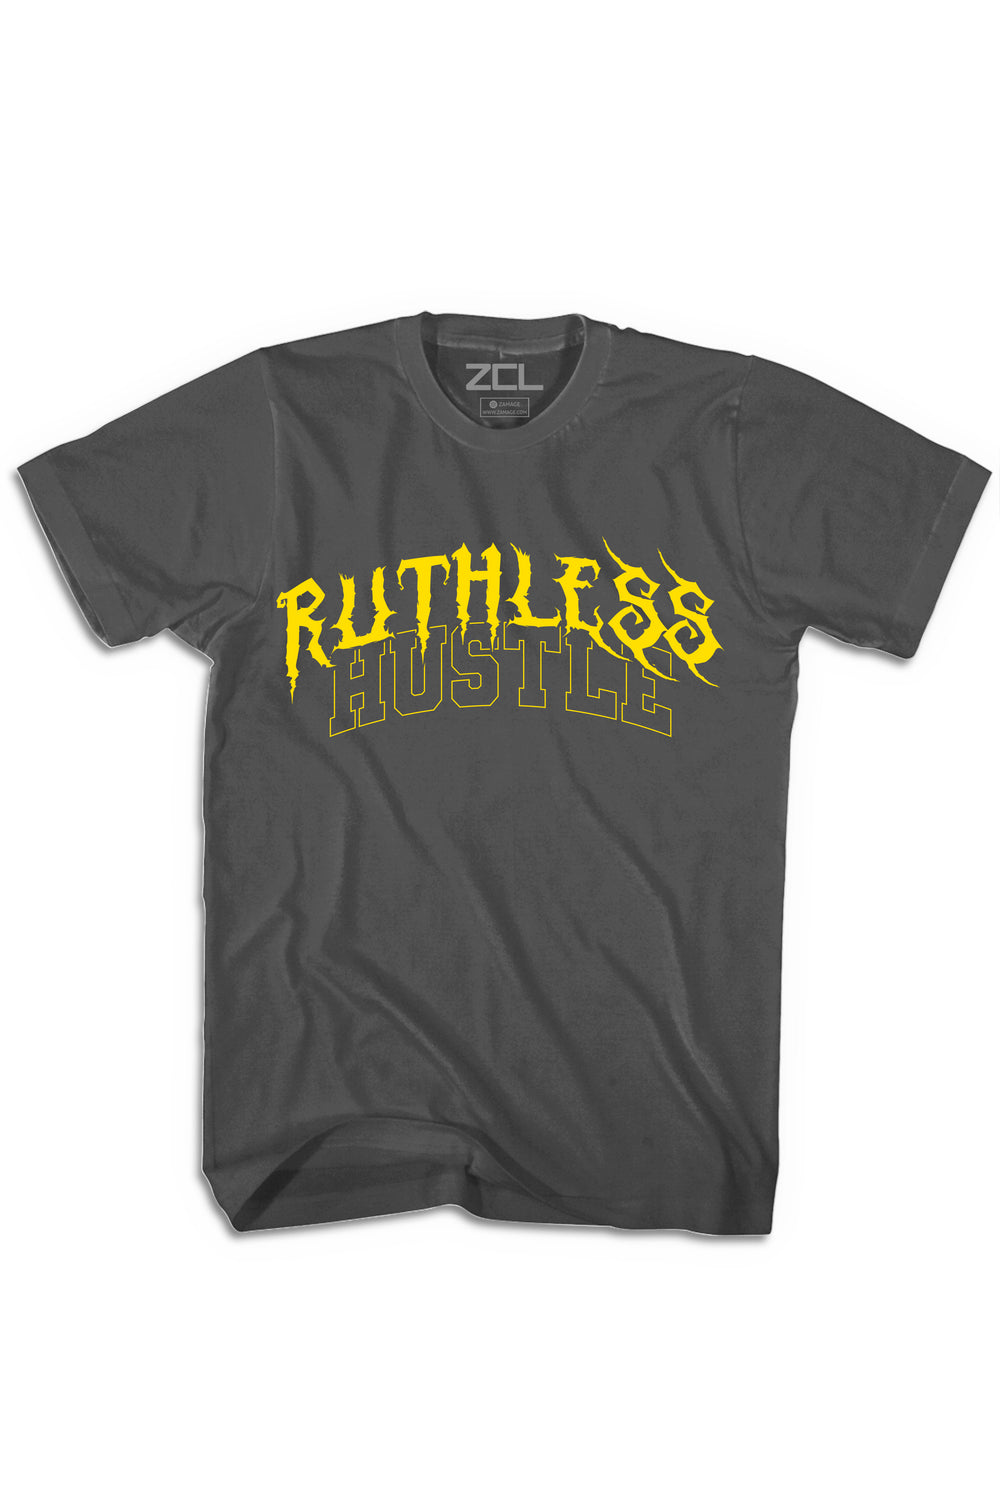 Ruthless Hustle Tee (Yellow Logo)